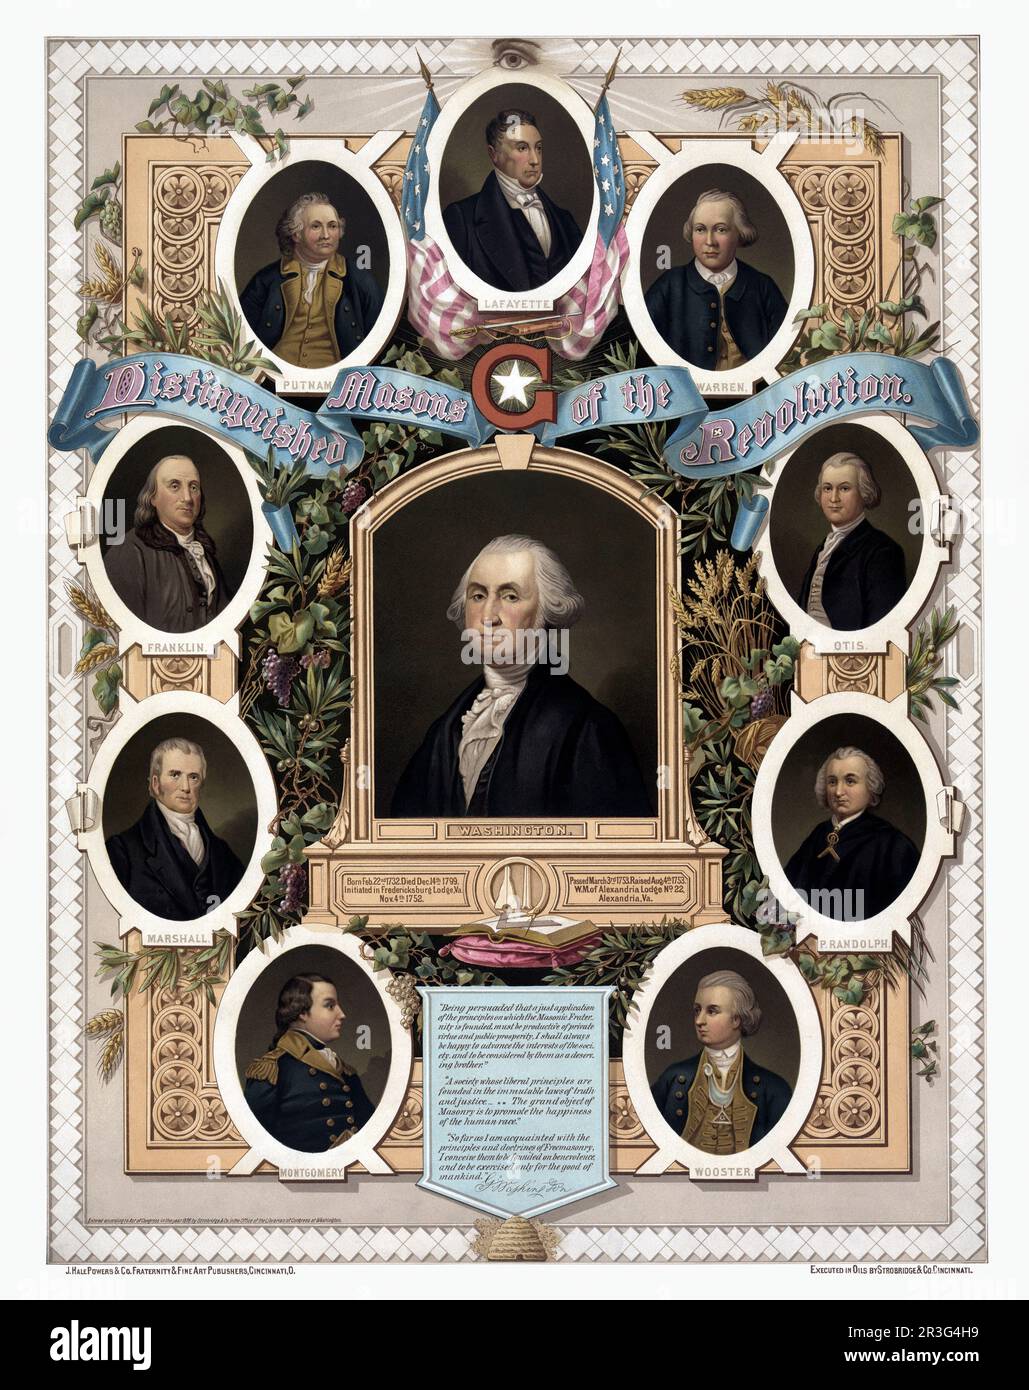 Distinguished masons of the revolution. Stock Photo